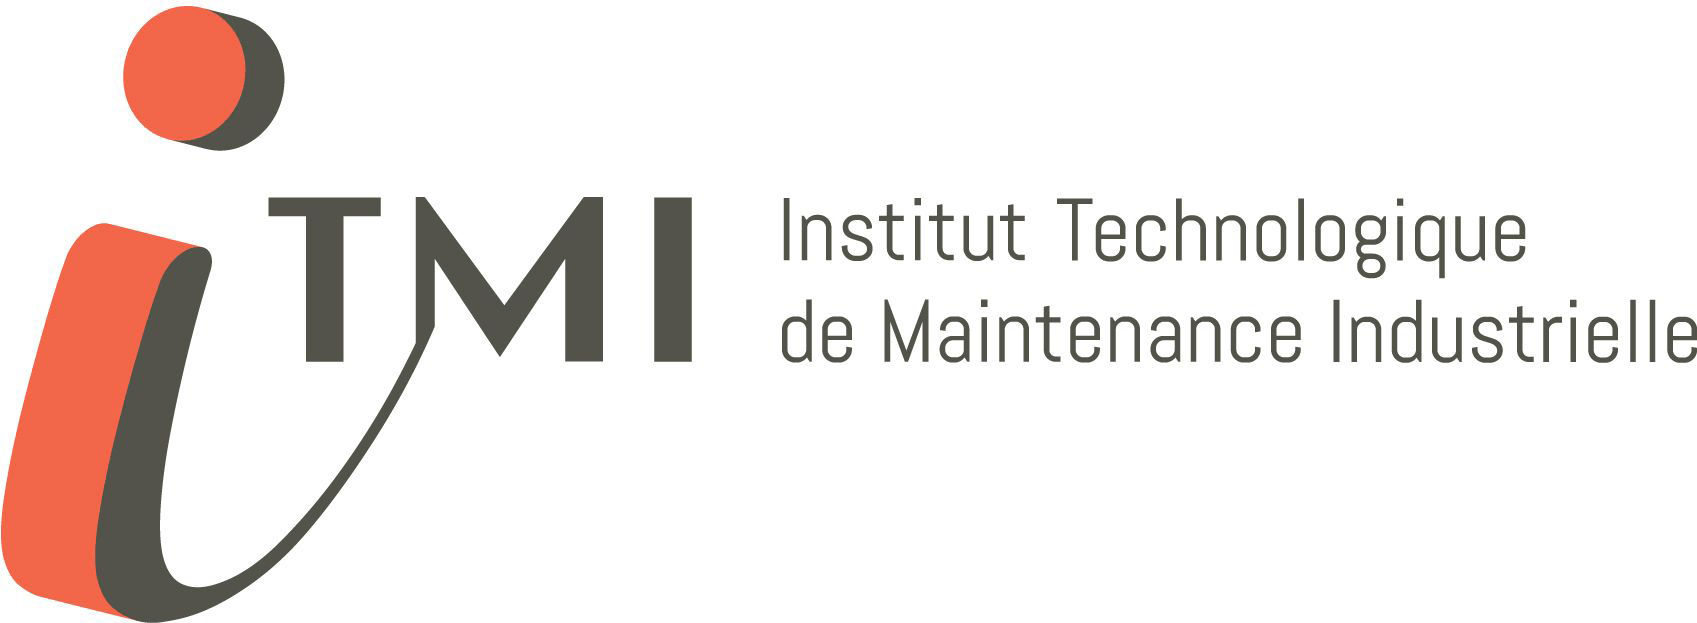 ITMI-CCTT-en-maintenance-industrielle-Stept-Iles